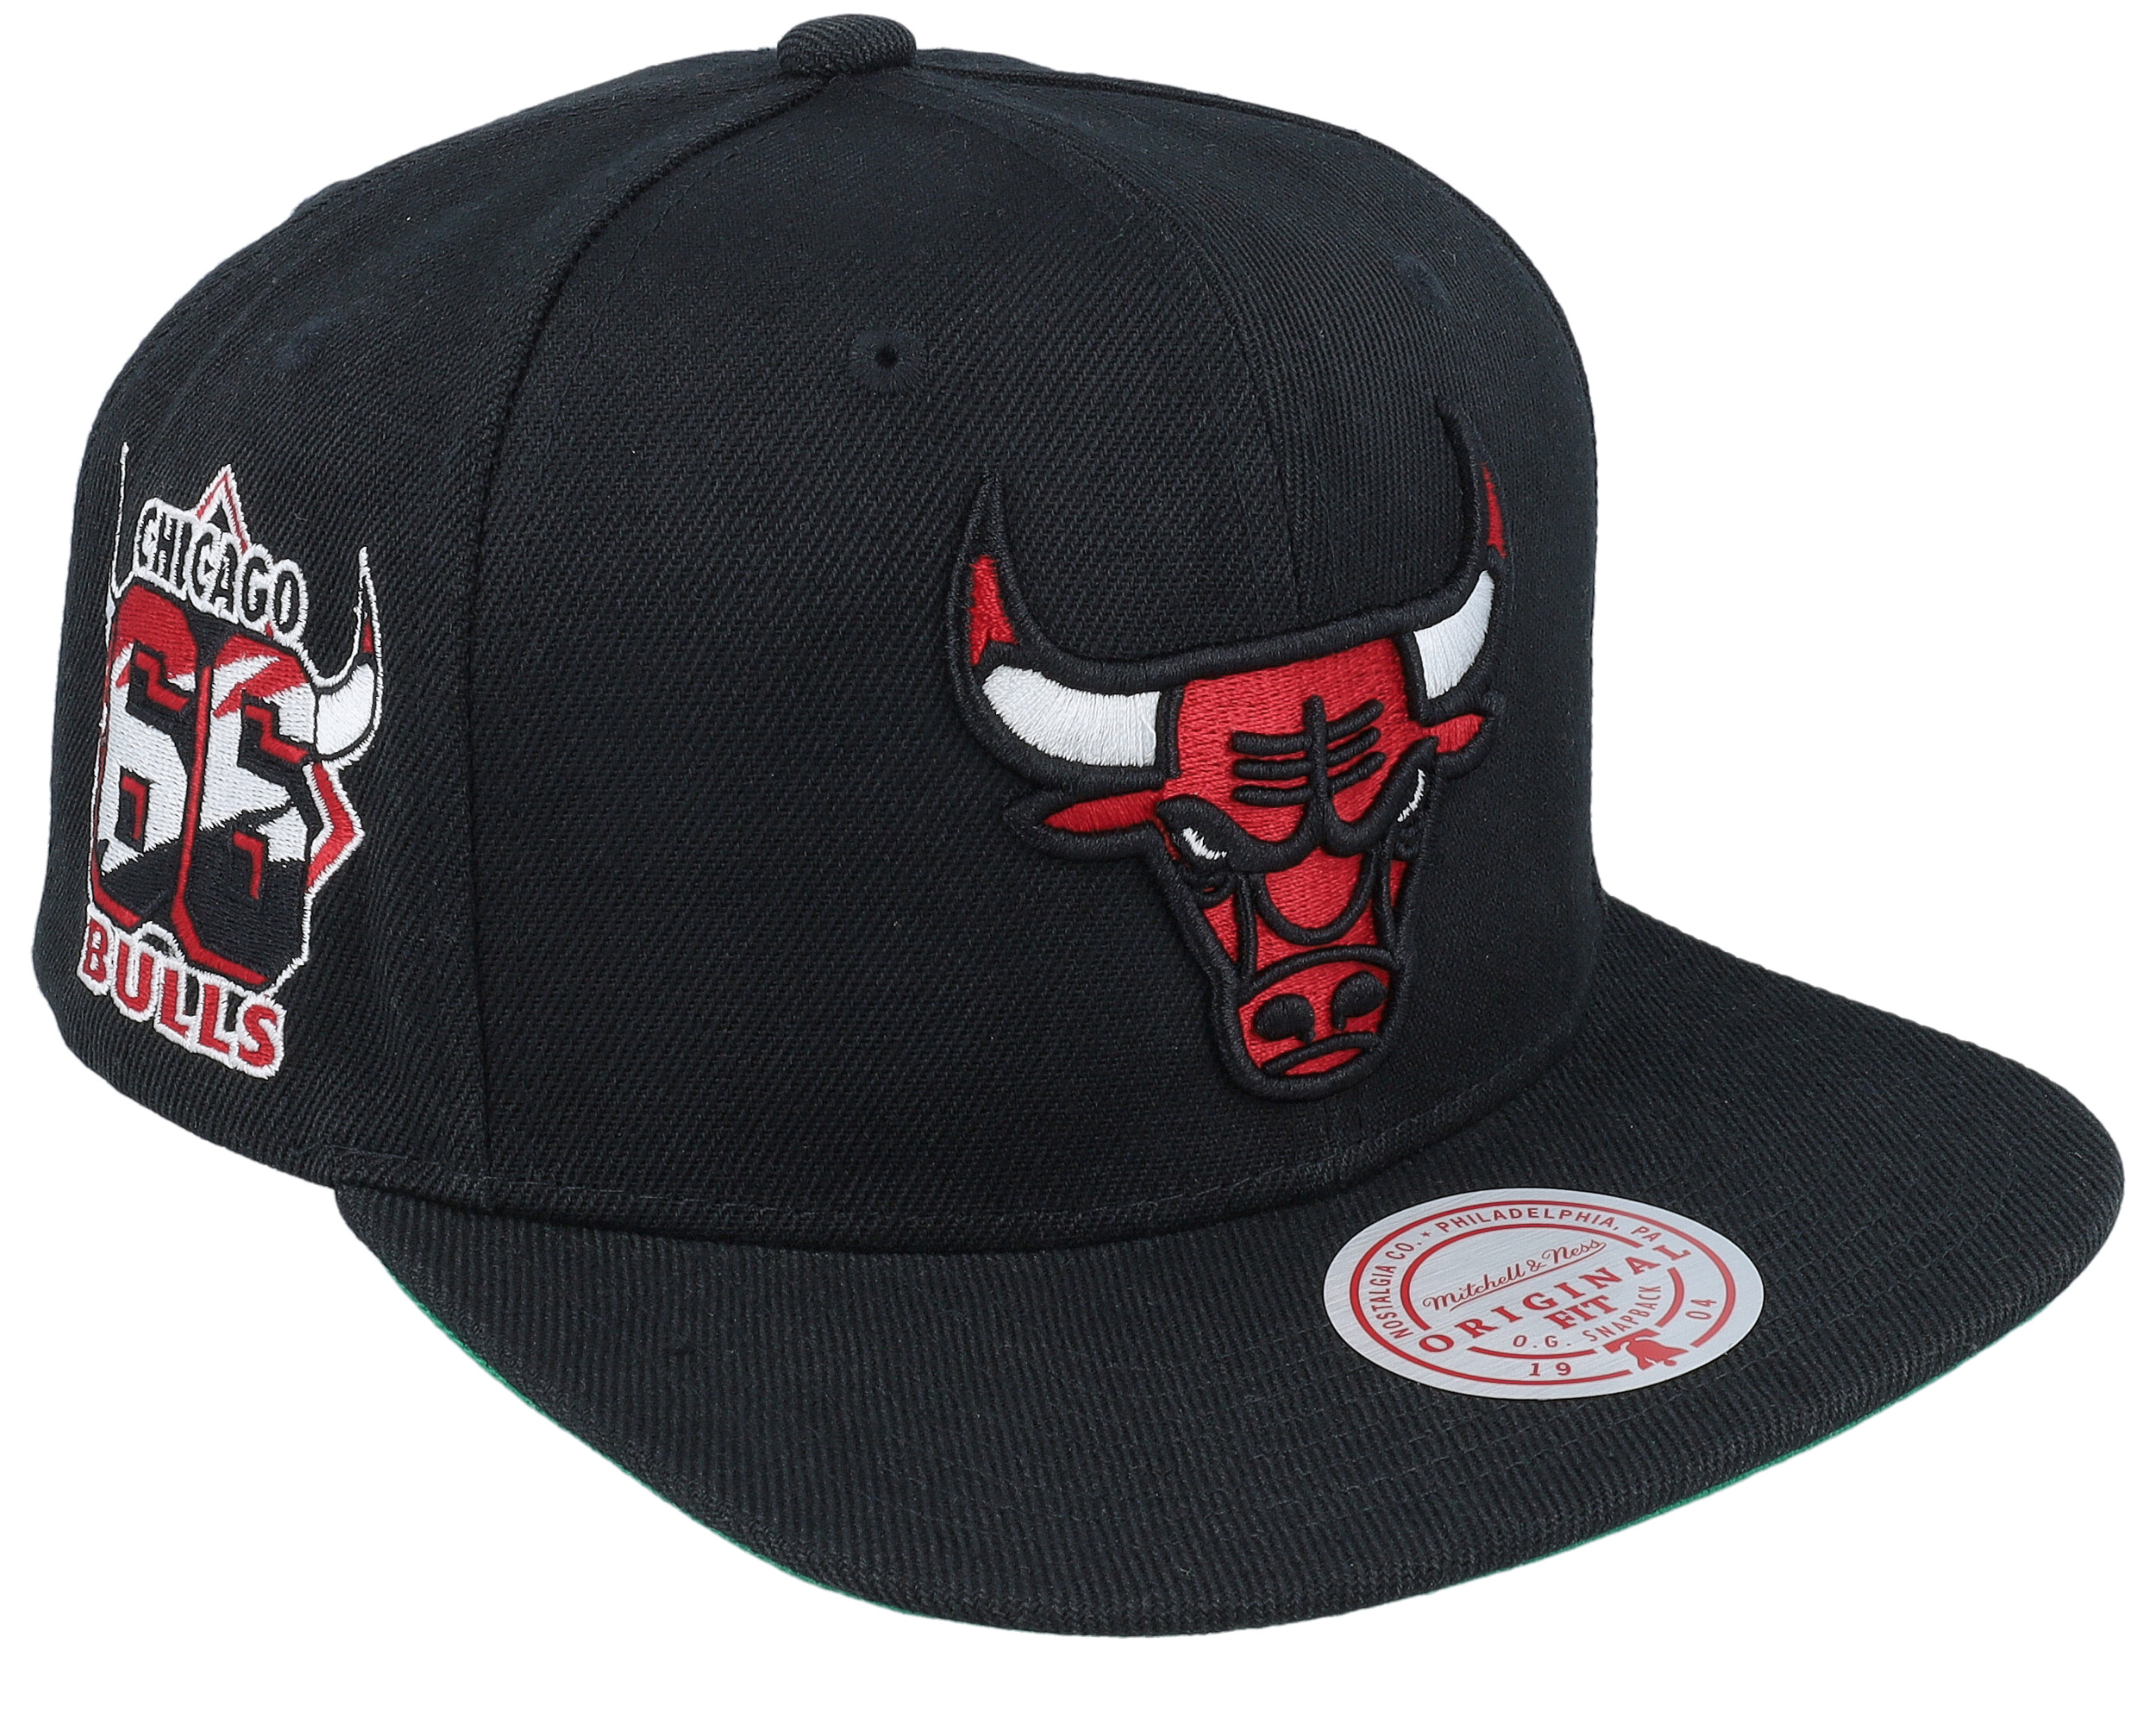 Chicago Bulls Mitchell & Ness Snapback Cap Black